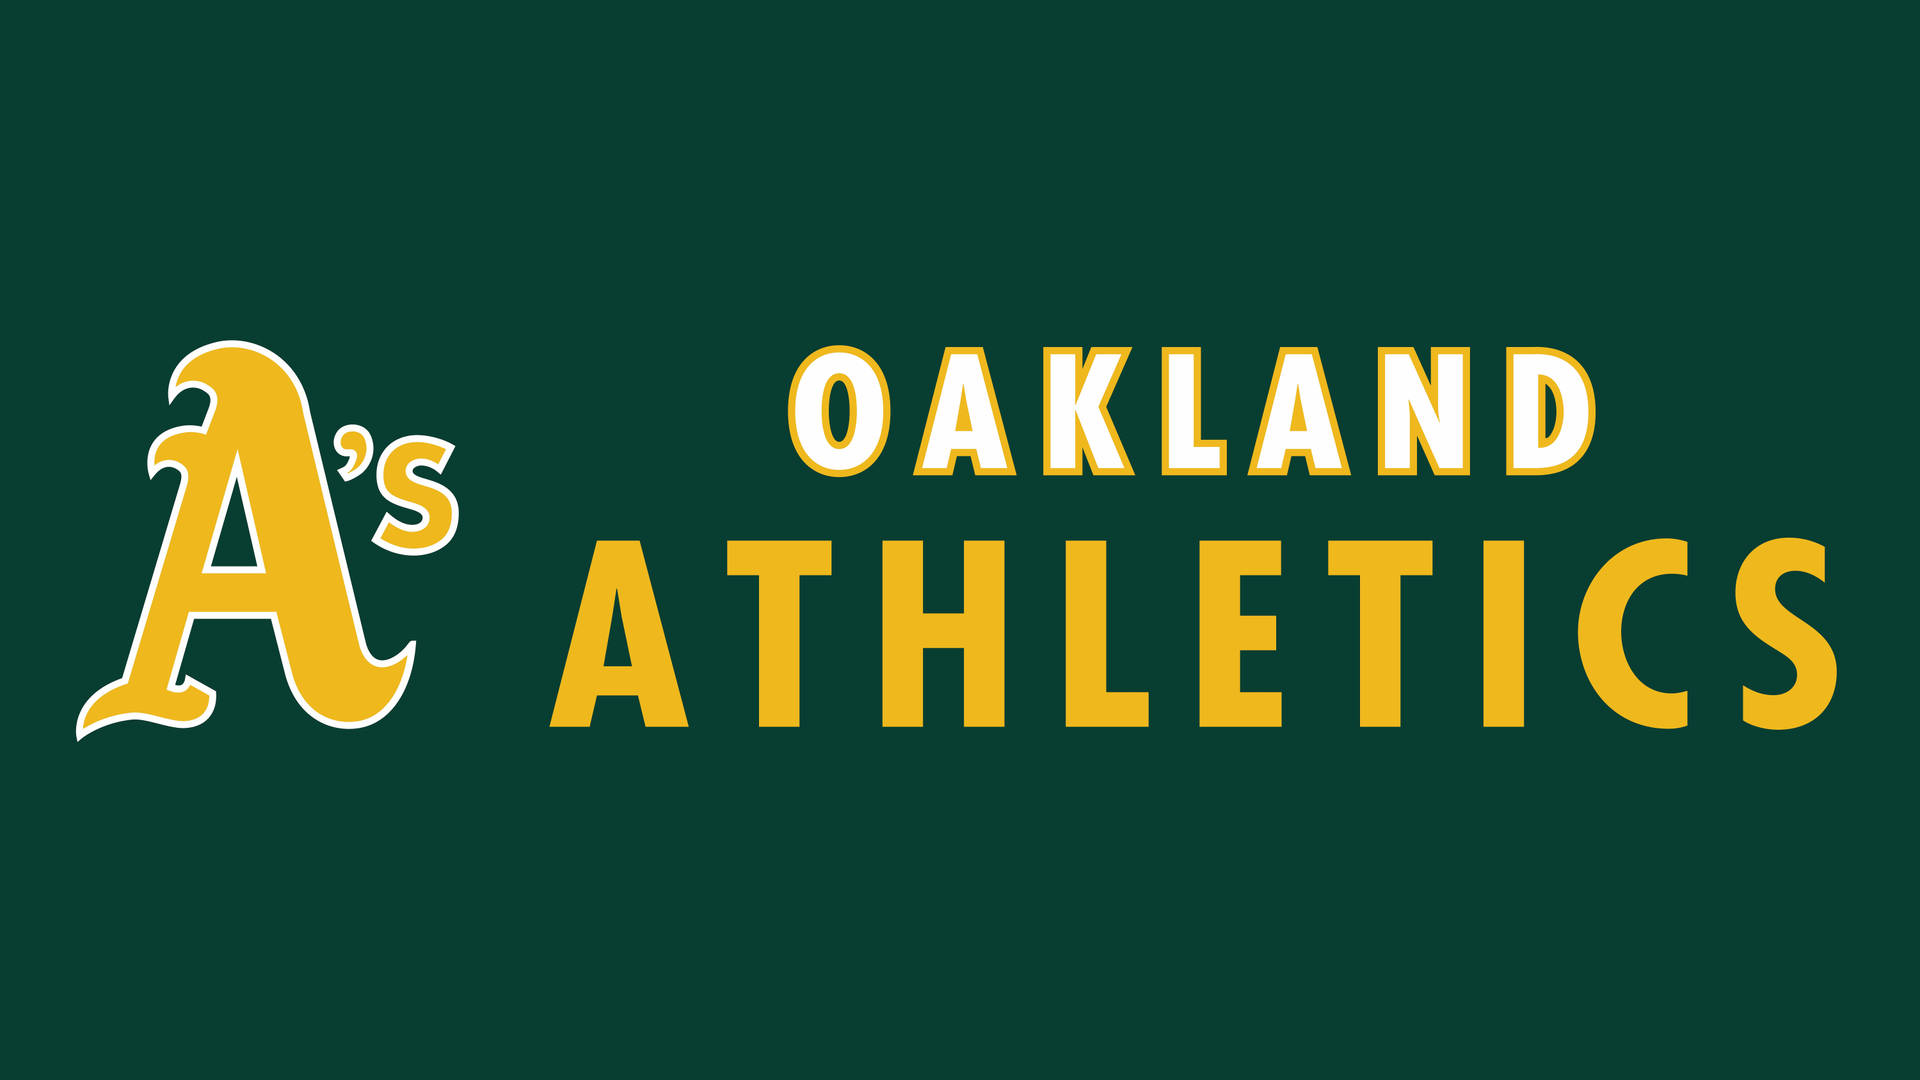 Oakland Athletics Simple Wallpaper